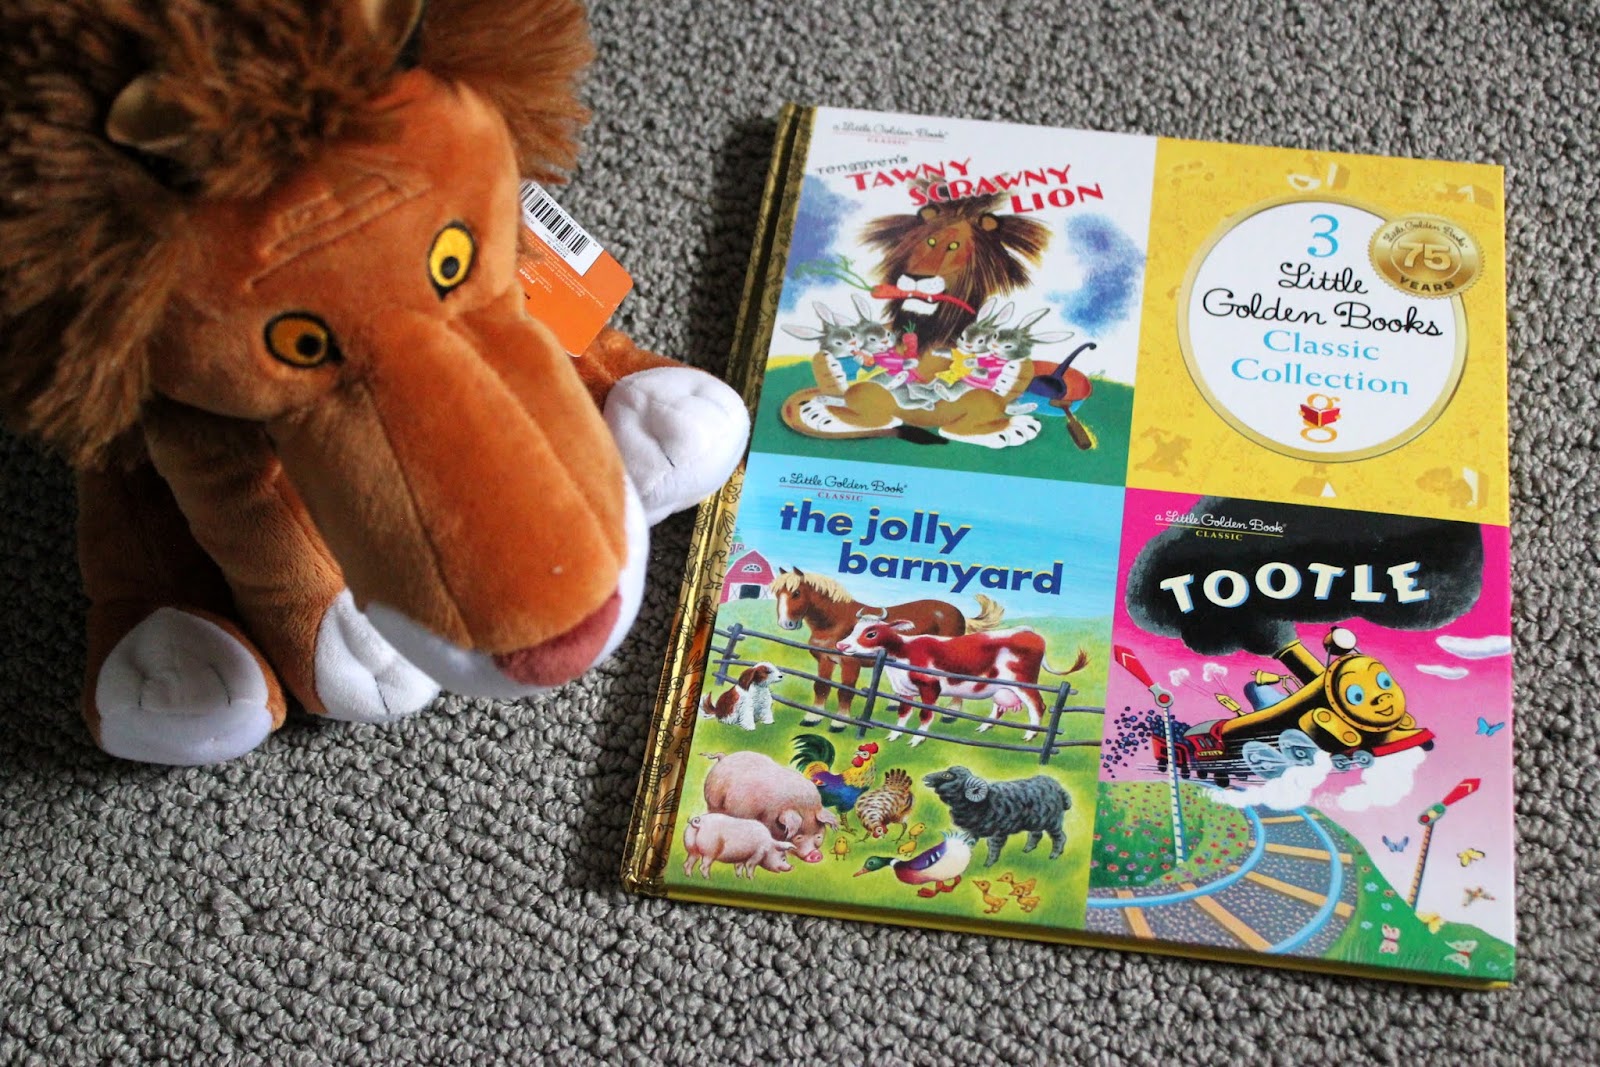 Kohls Cares Lion Tawny Scrawny Stuffed Plush Animal From Golden Books Stories for sale online 